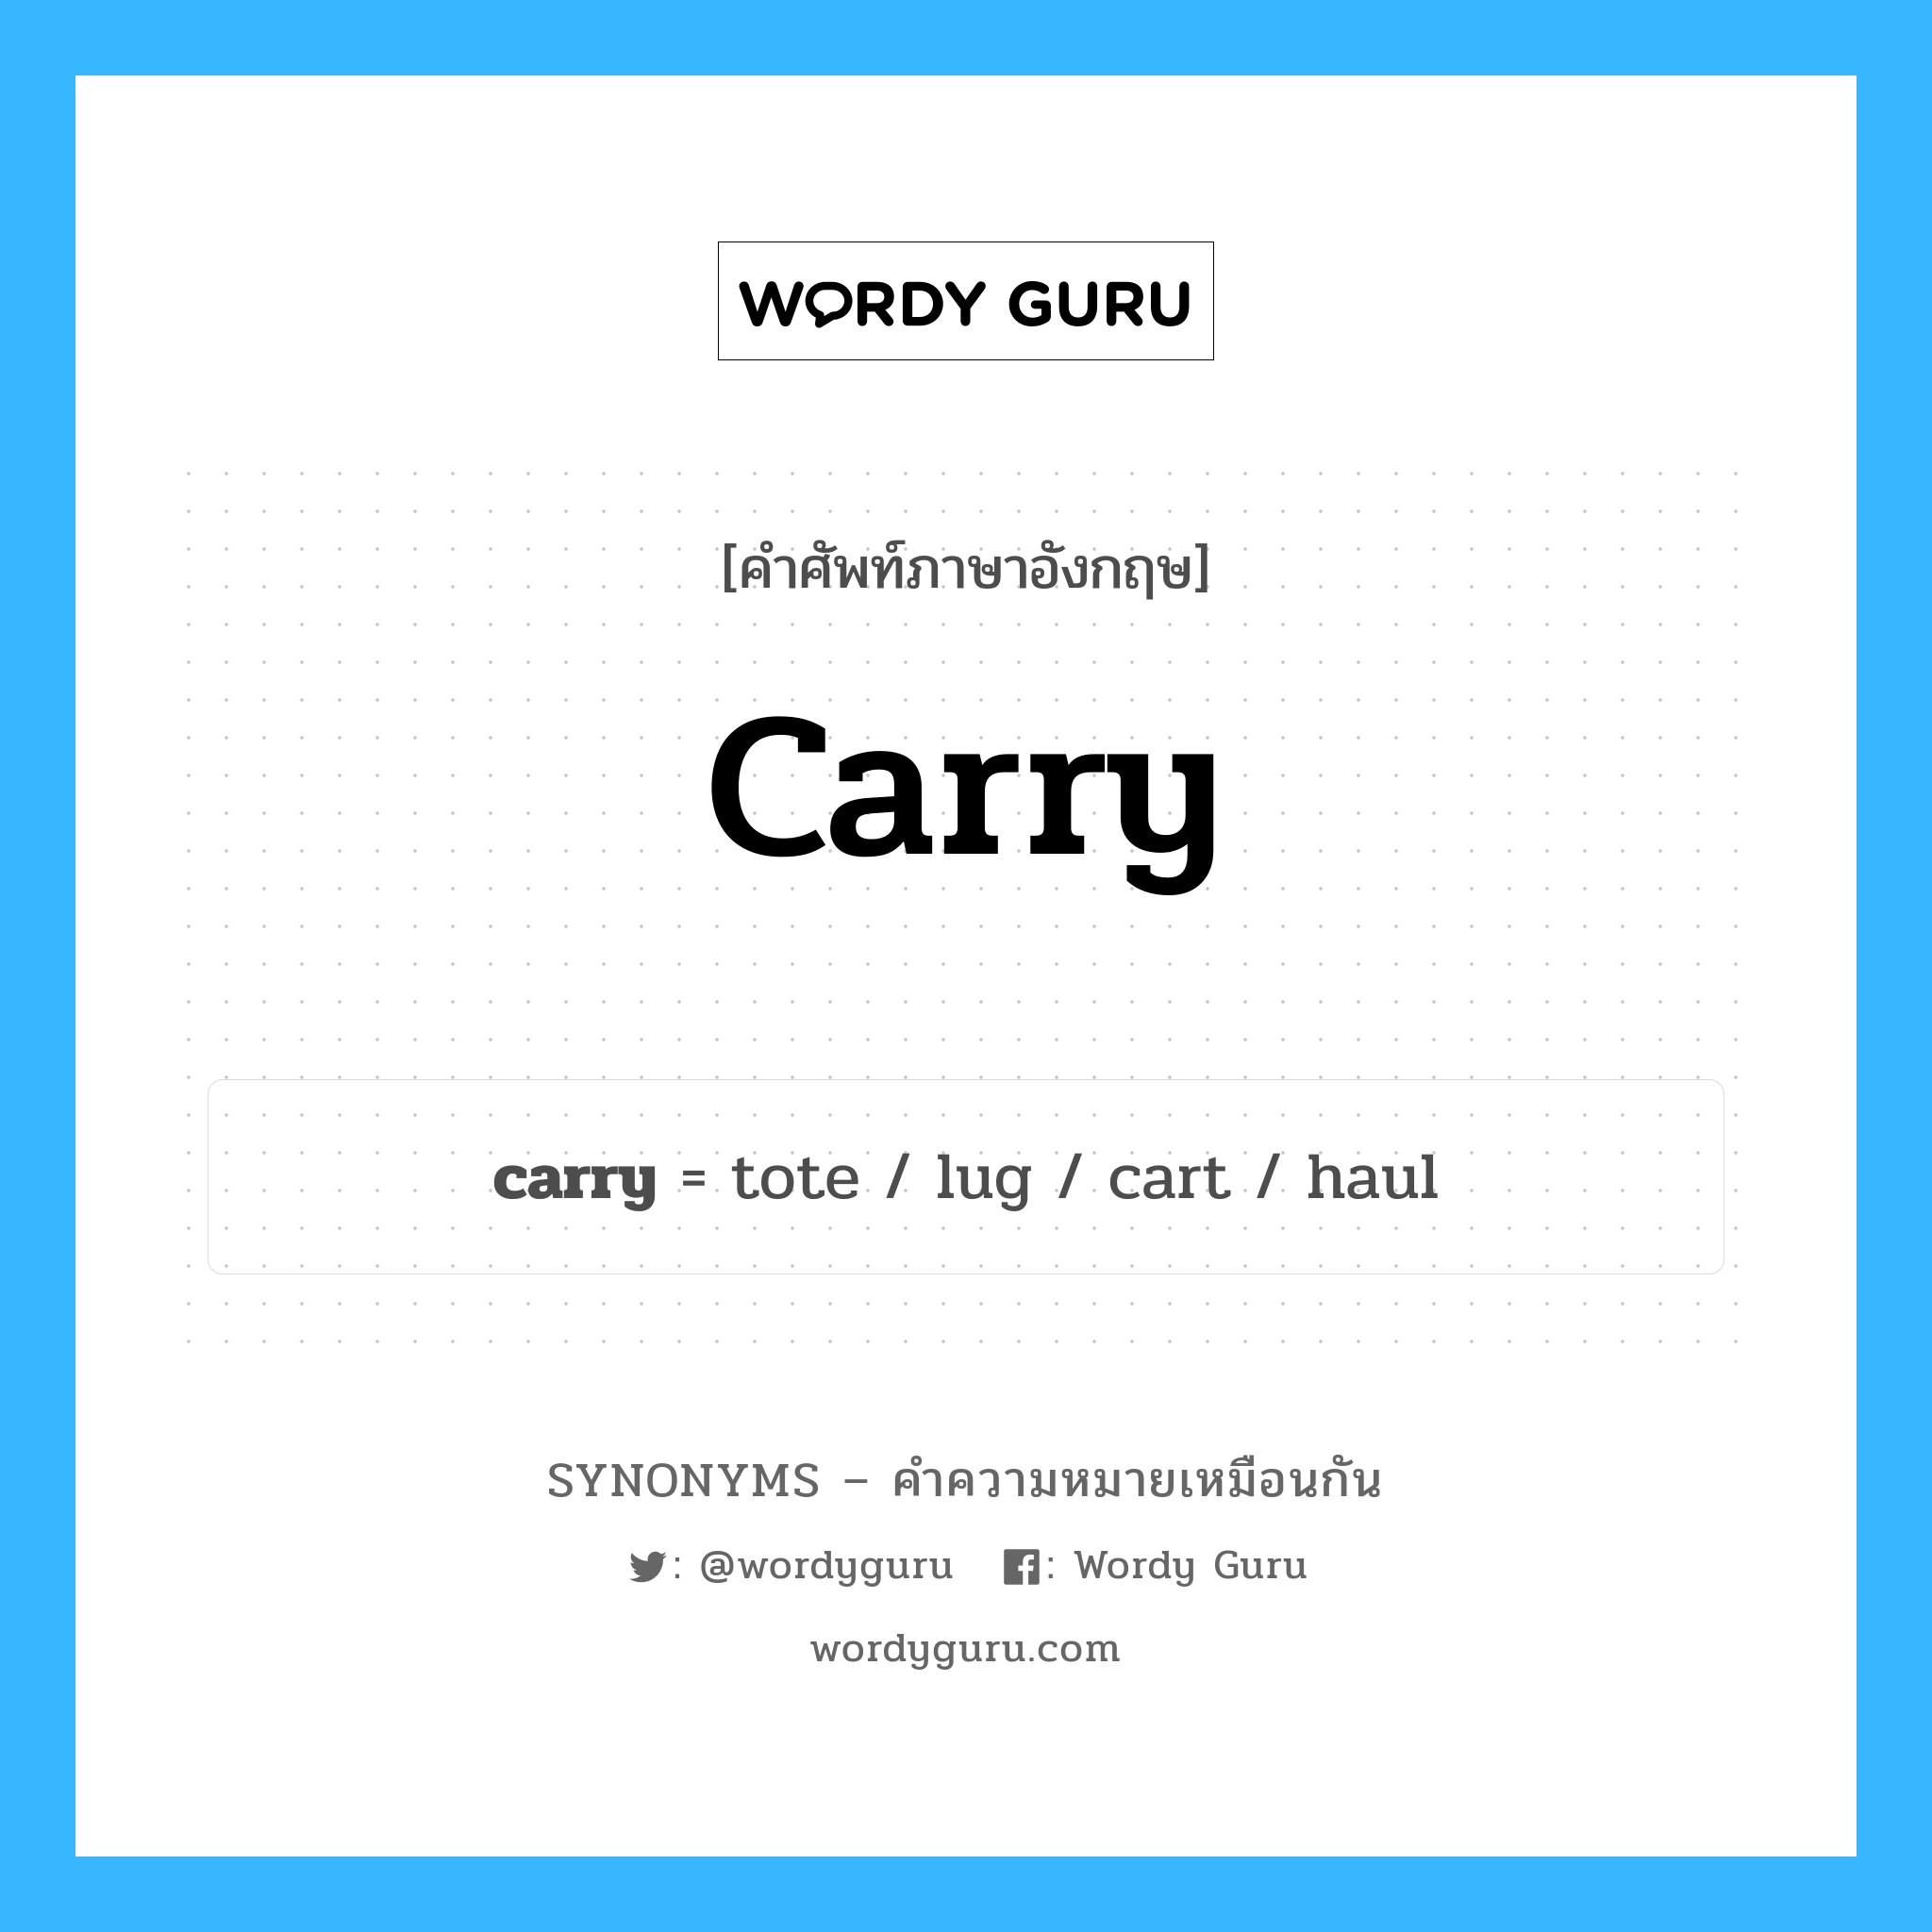 carry เป็นหนึ่งใน haul และมีคำอื่น ๆ อีกดังนี้, คำศัพท์ภาษาอังกฤษ carry ความหมายคล้ายกันกับ haul แปลว่า เดินทางไกล หมวด haul